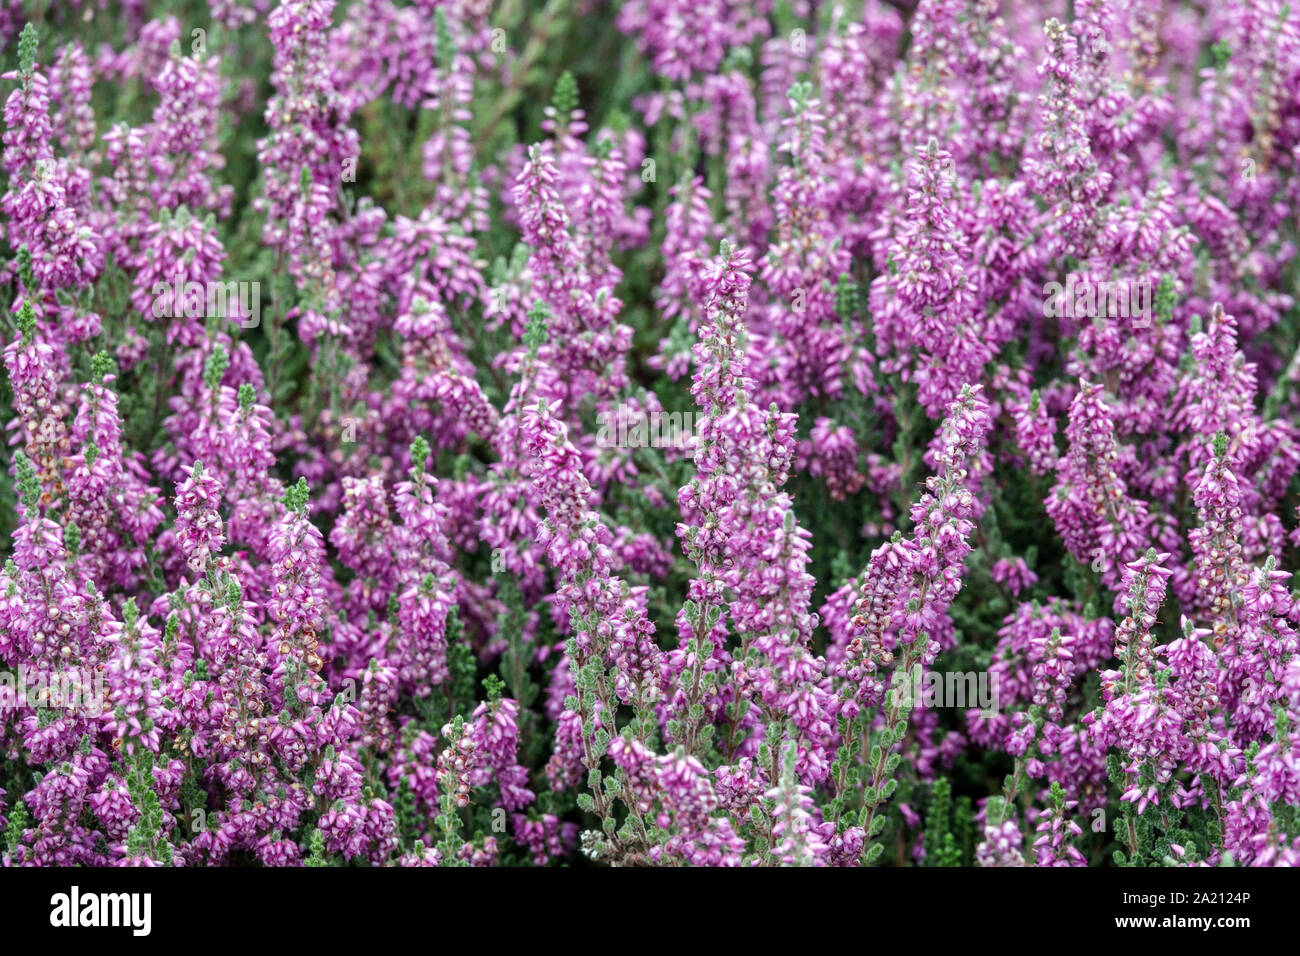 Rosa Calluna vulgaris "Grijsje' heather Foto Stock